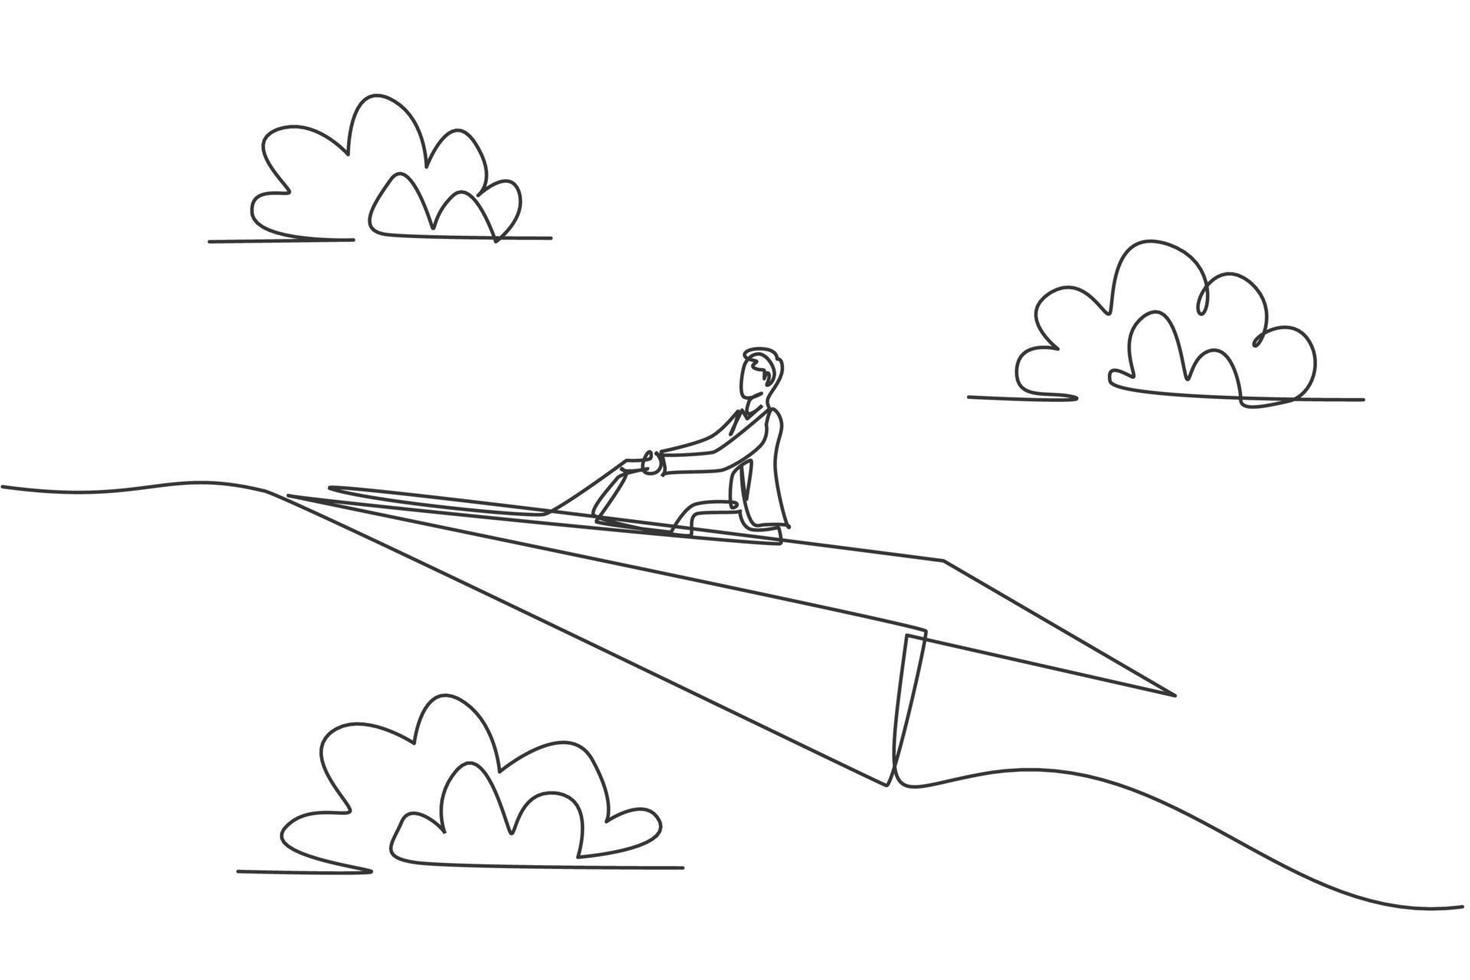 enda kontinuerlig linje ritning av ung affärsman flyger ett papper luftplan högt. professionell affärsman, metafor koncept. minimalism dynamisk en linje dragning. grafisk design vektor illustration